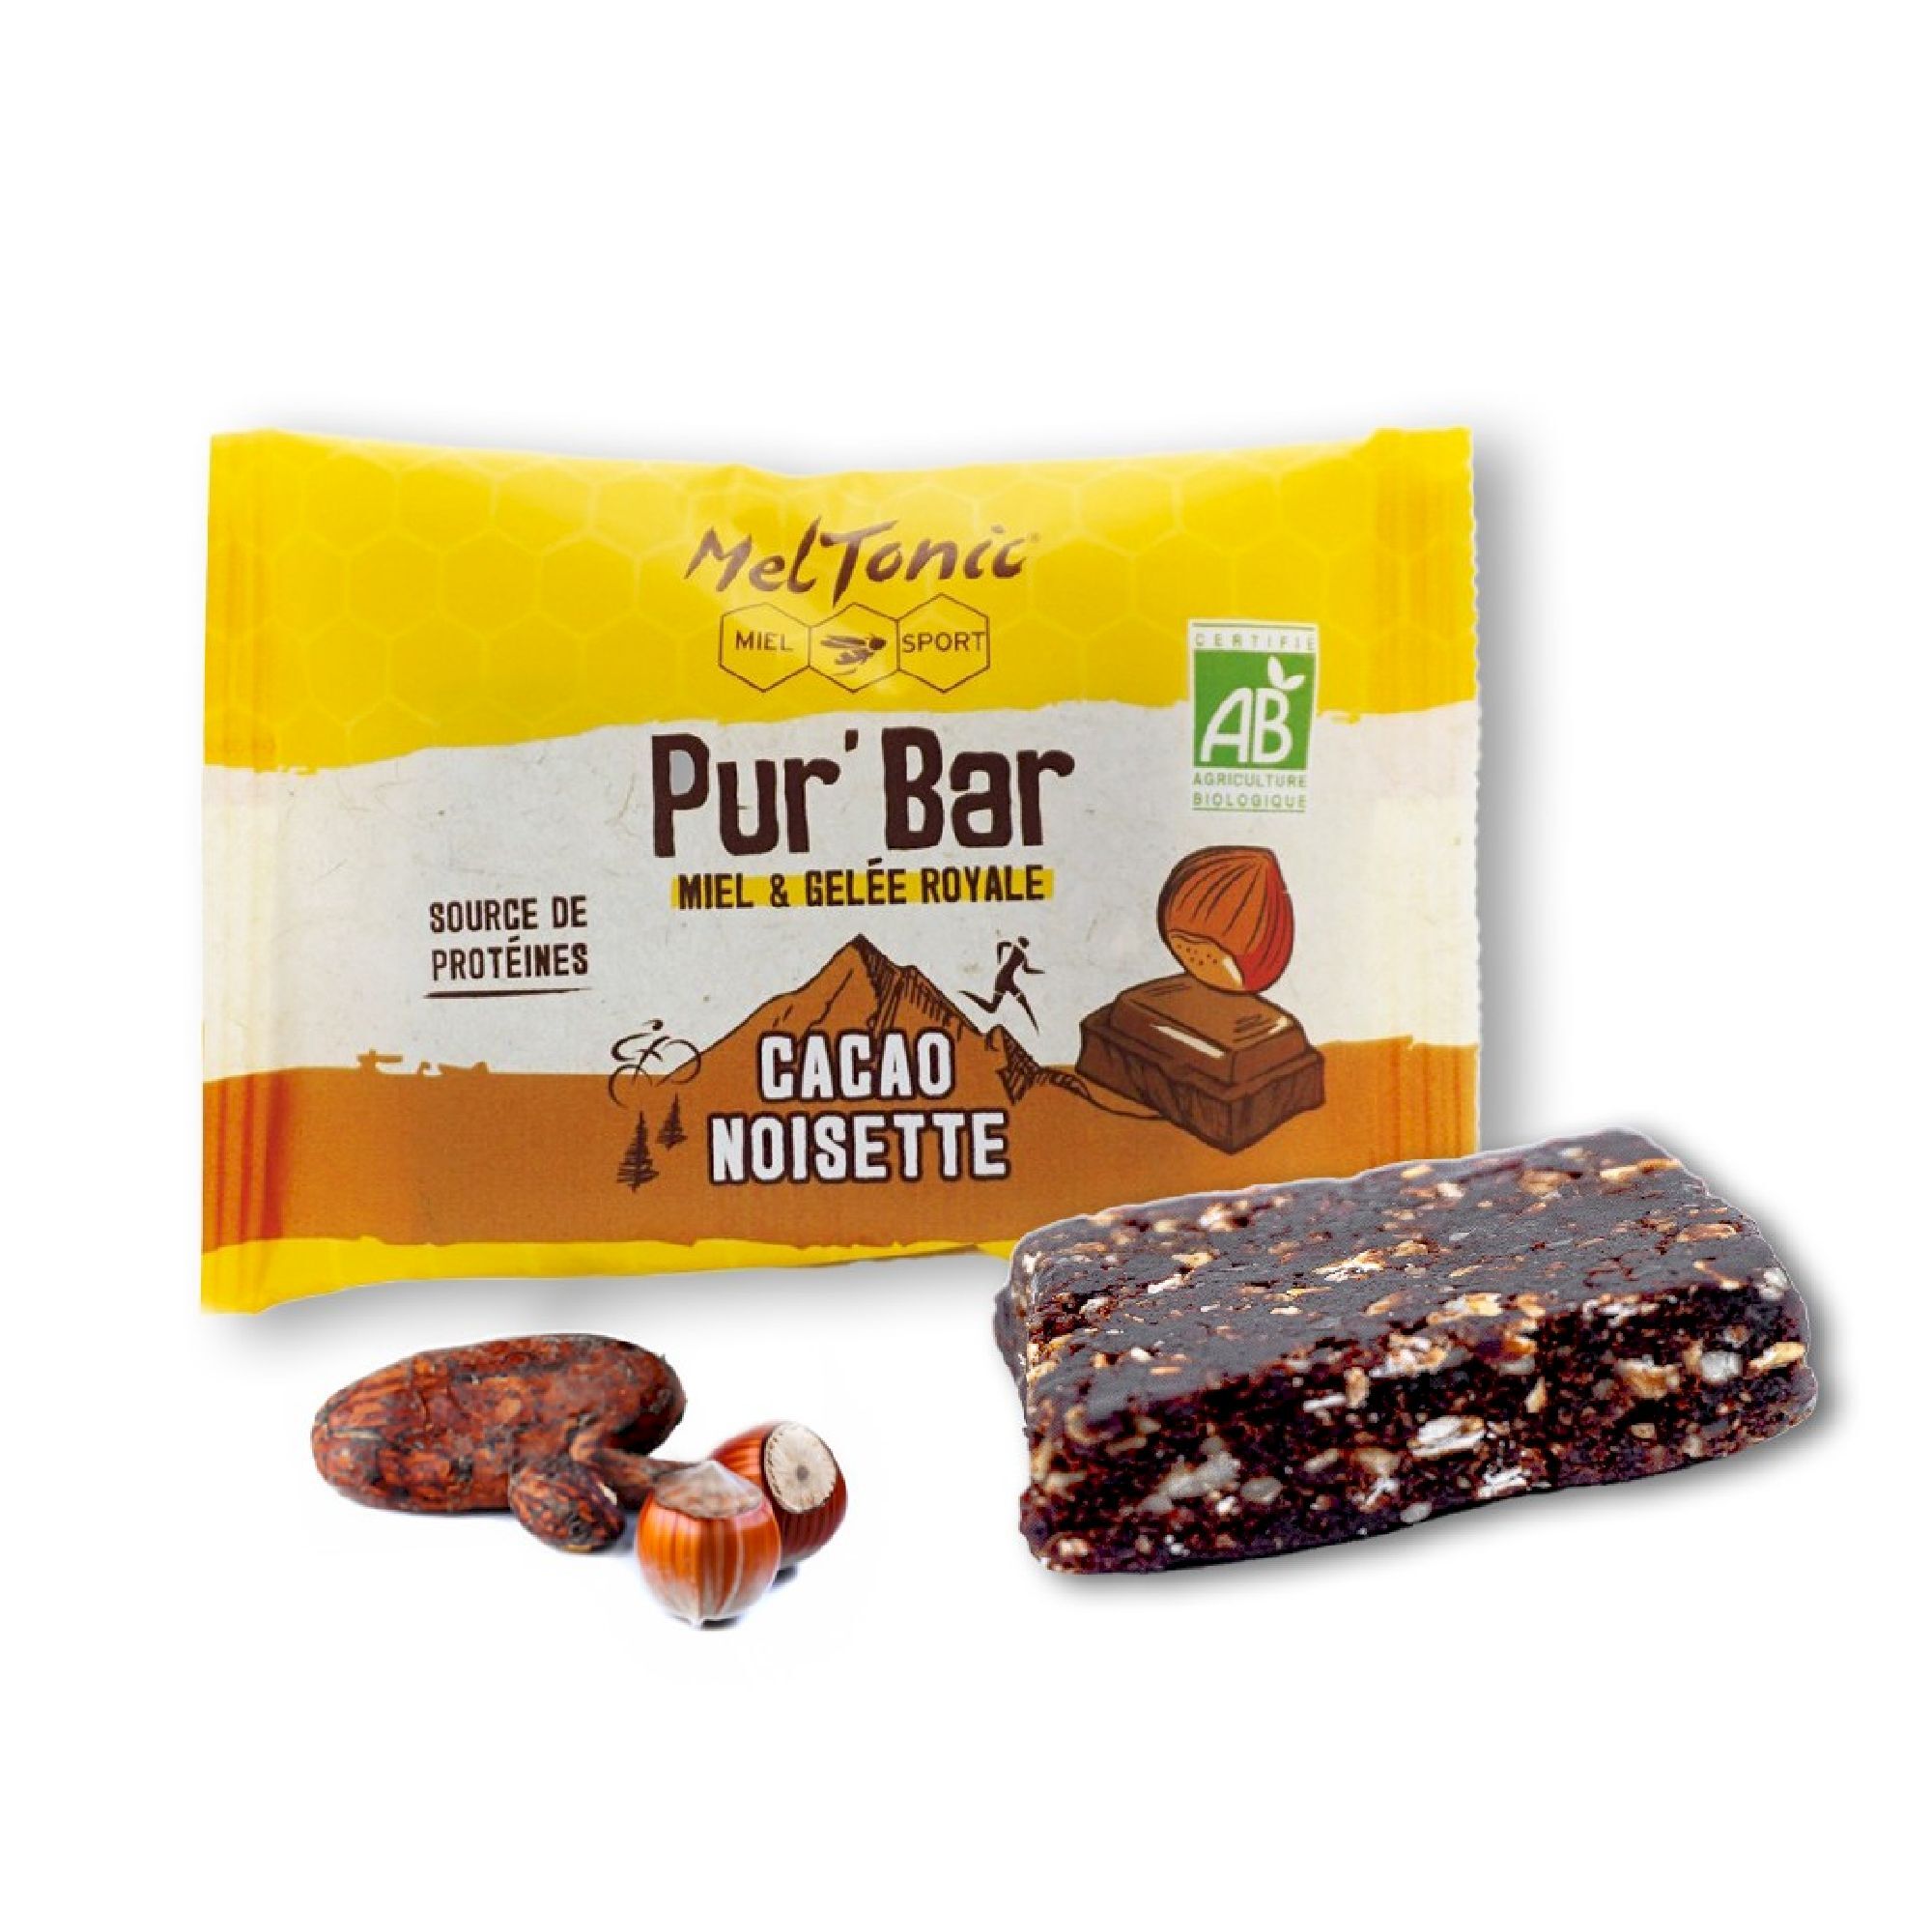 Meltonic Pur' Bar Bio Cacao Noisette Miel & Gelée Royale - Energiapatukat | Hardloop